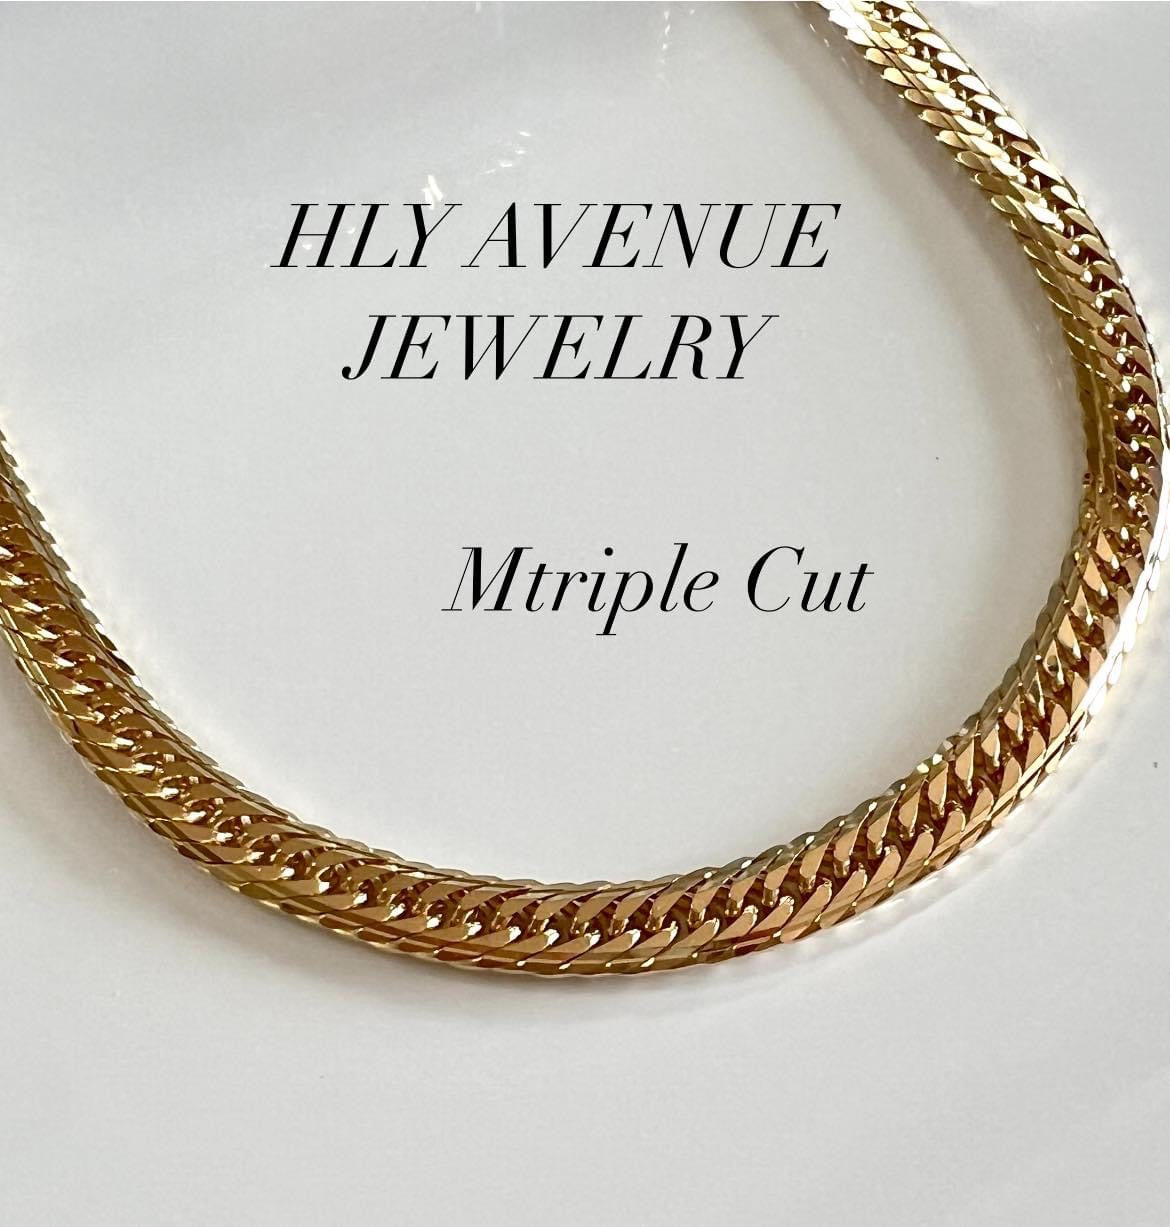 K18 Japan Gold MTriple Cut Kihei 50CM(20g) – HLY Avenue Jewelry